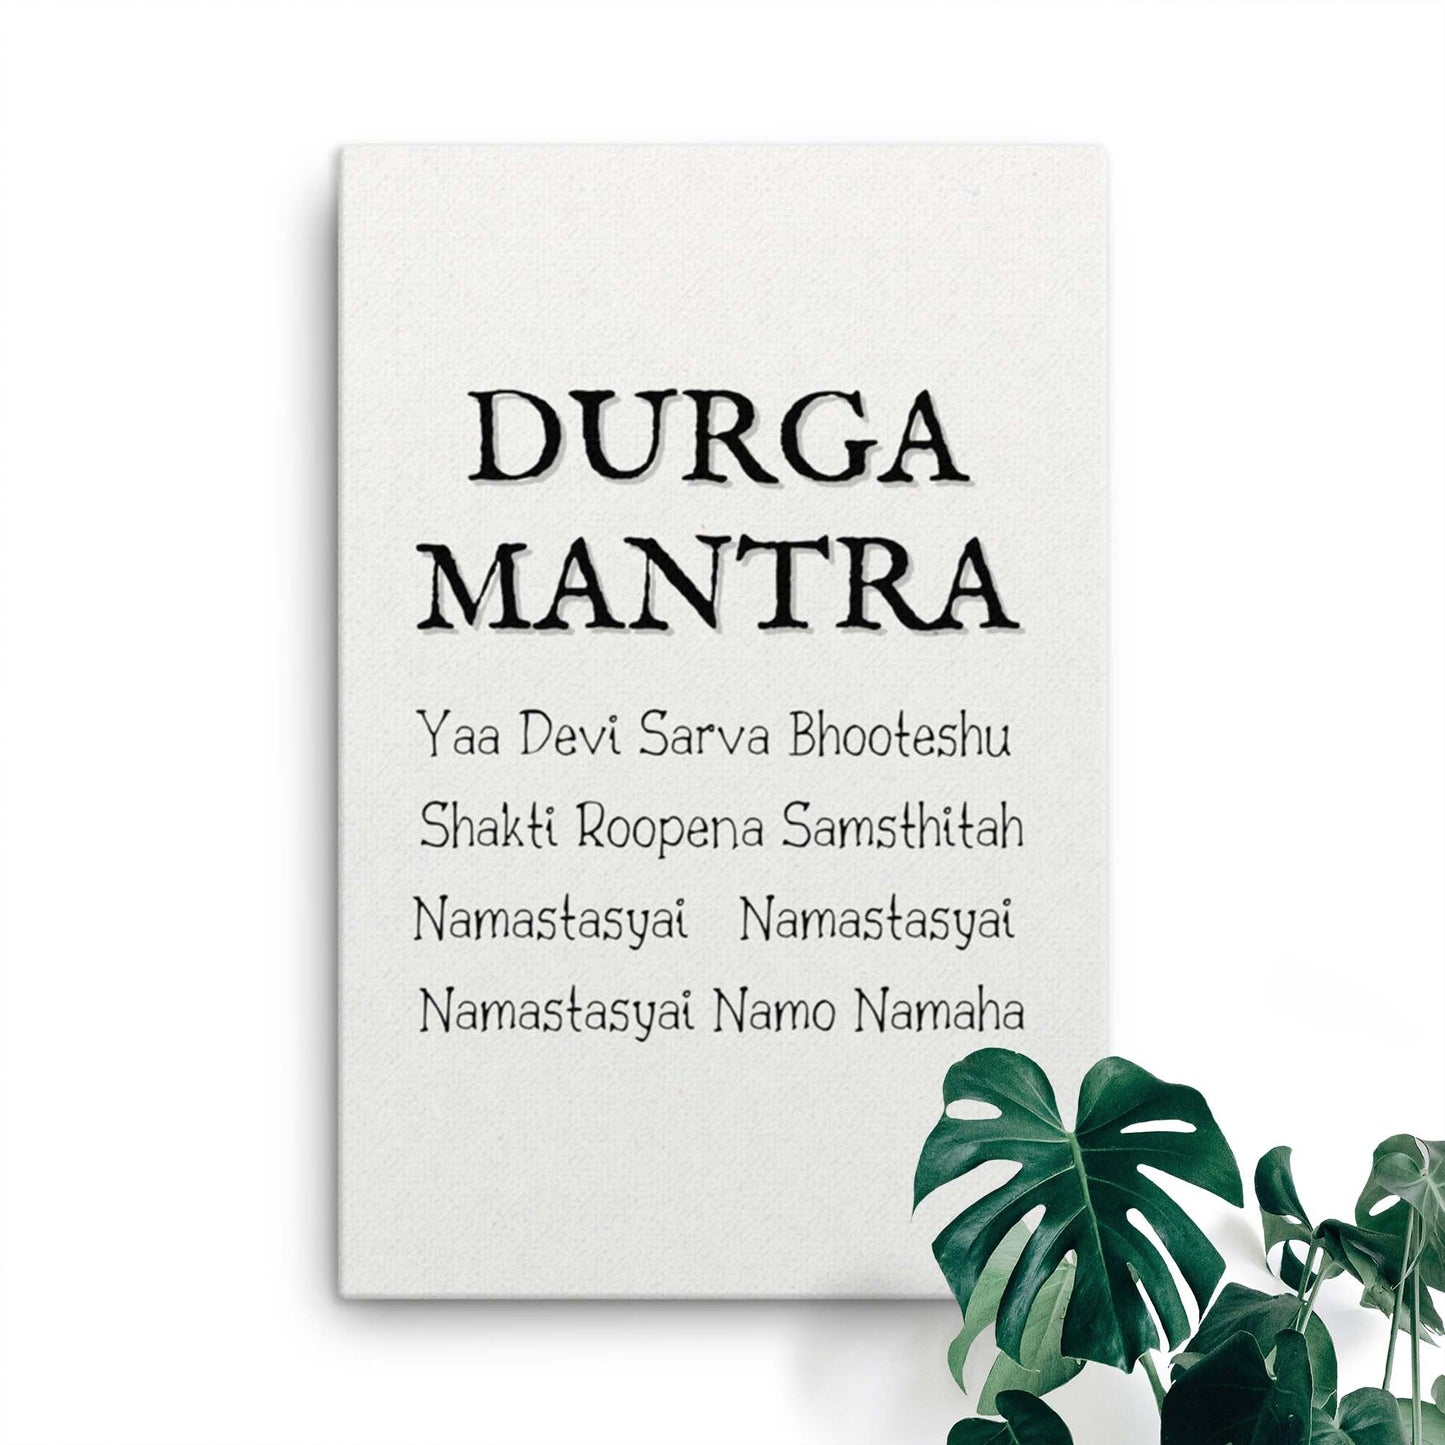 Durga mantra black on white minimalist canvas print